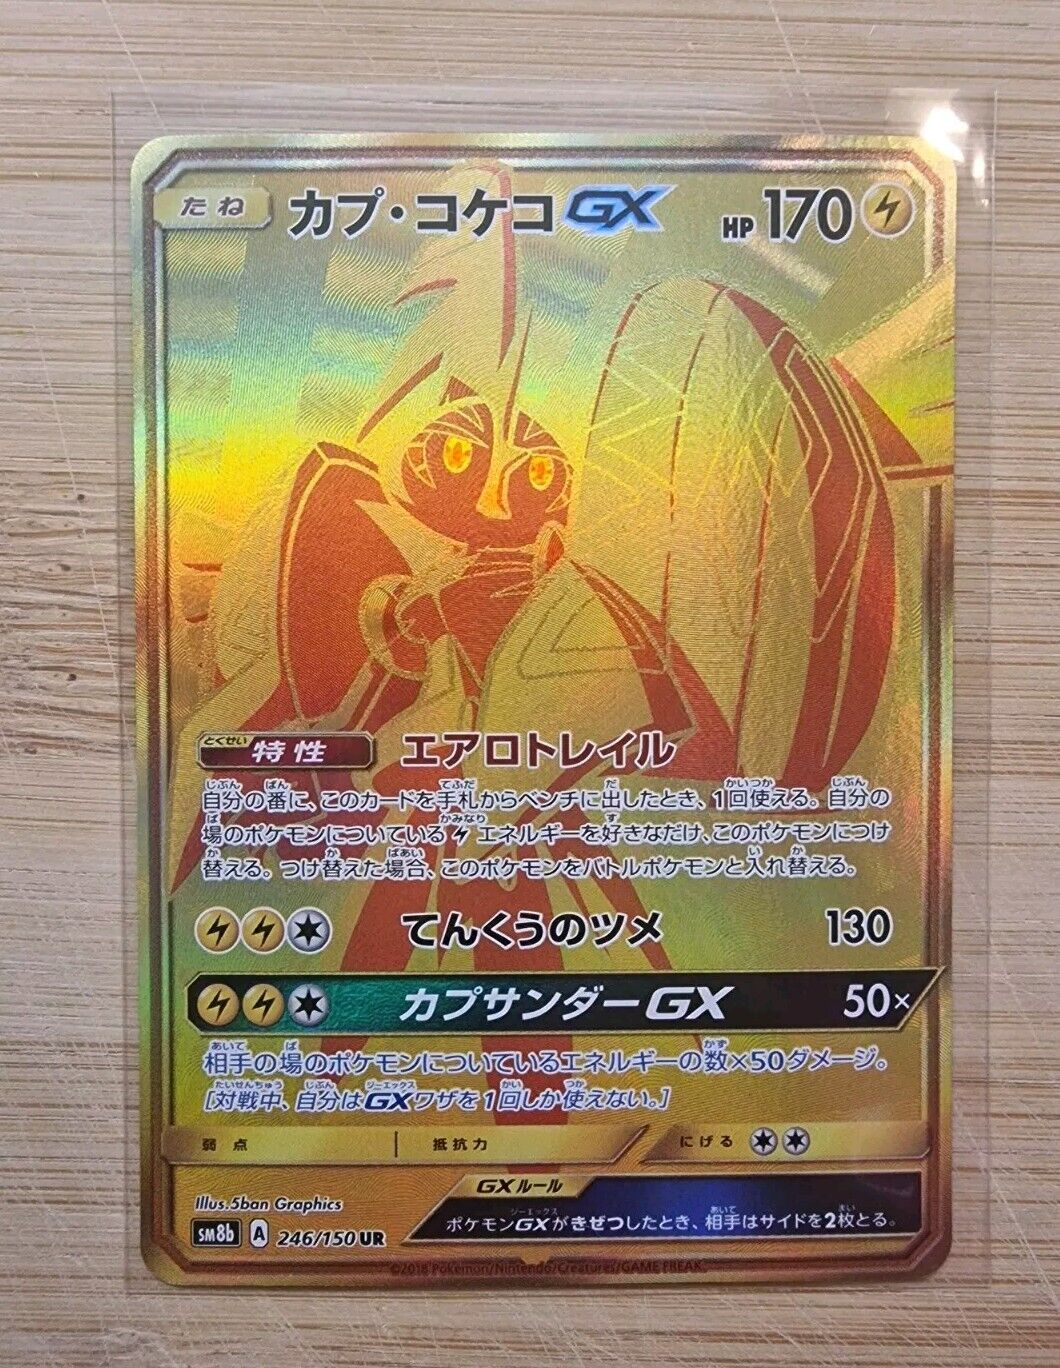 Pokemon card SM8b 246/150 Tapu Koko GX UR Ultra Shiny Japanese